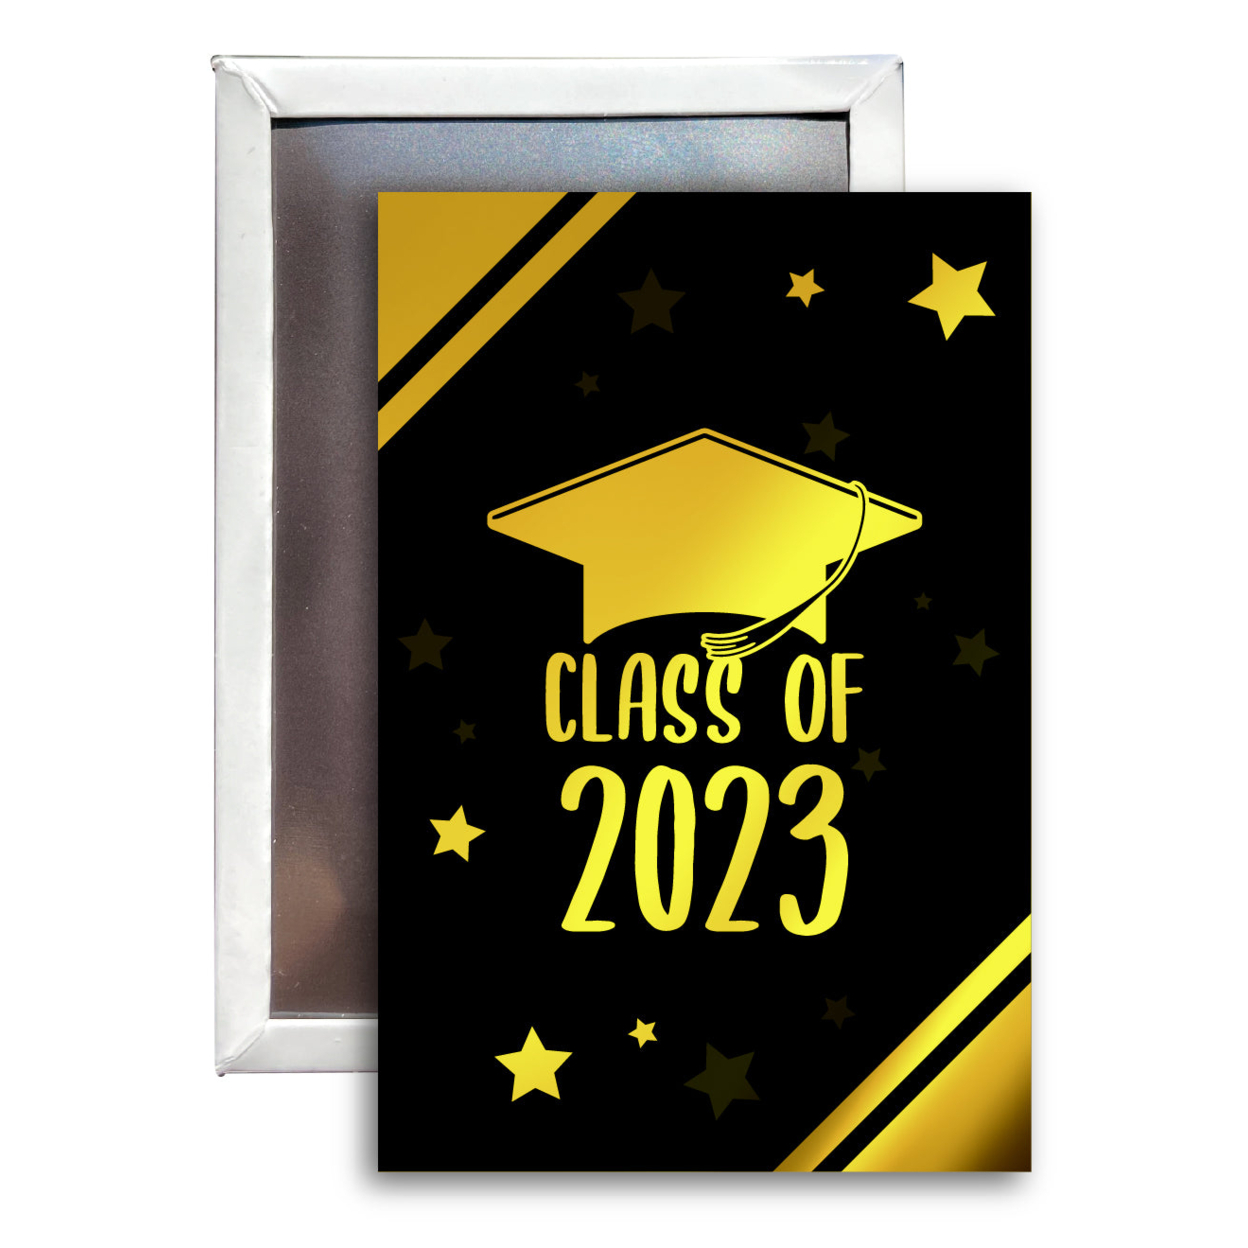 Class Of 2023 Senior Graduation Fridge Magnet - 2x3 Inch